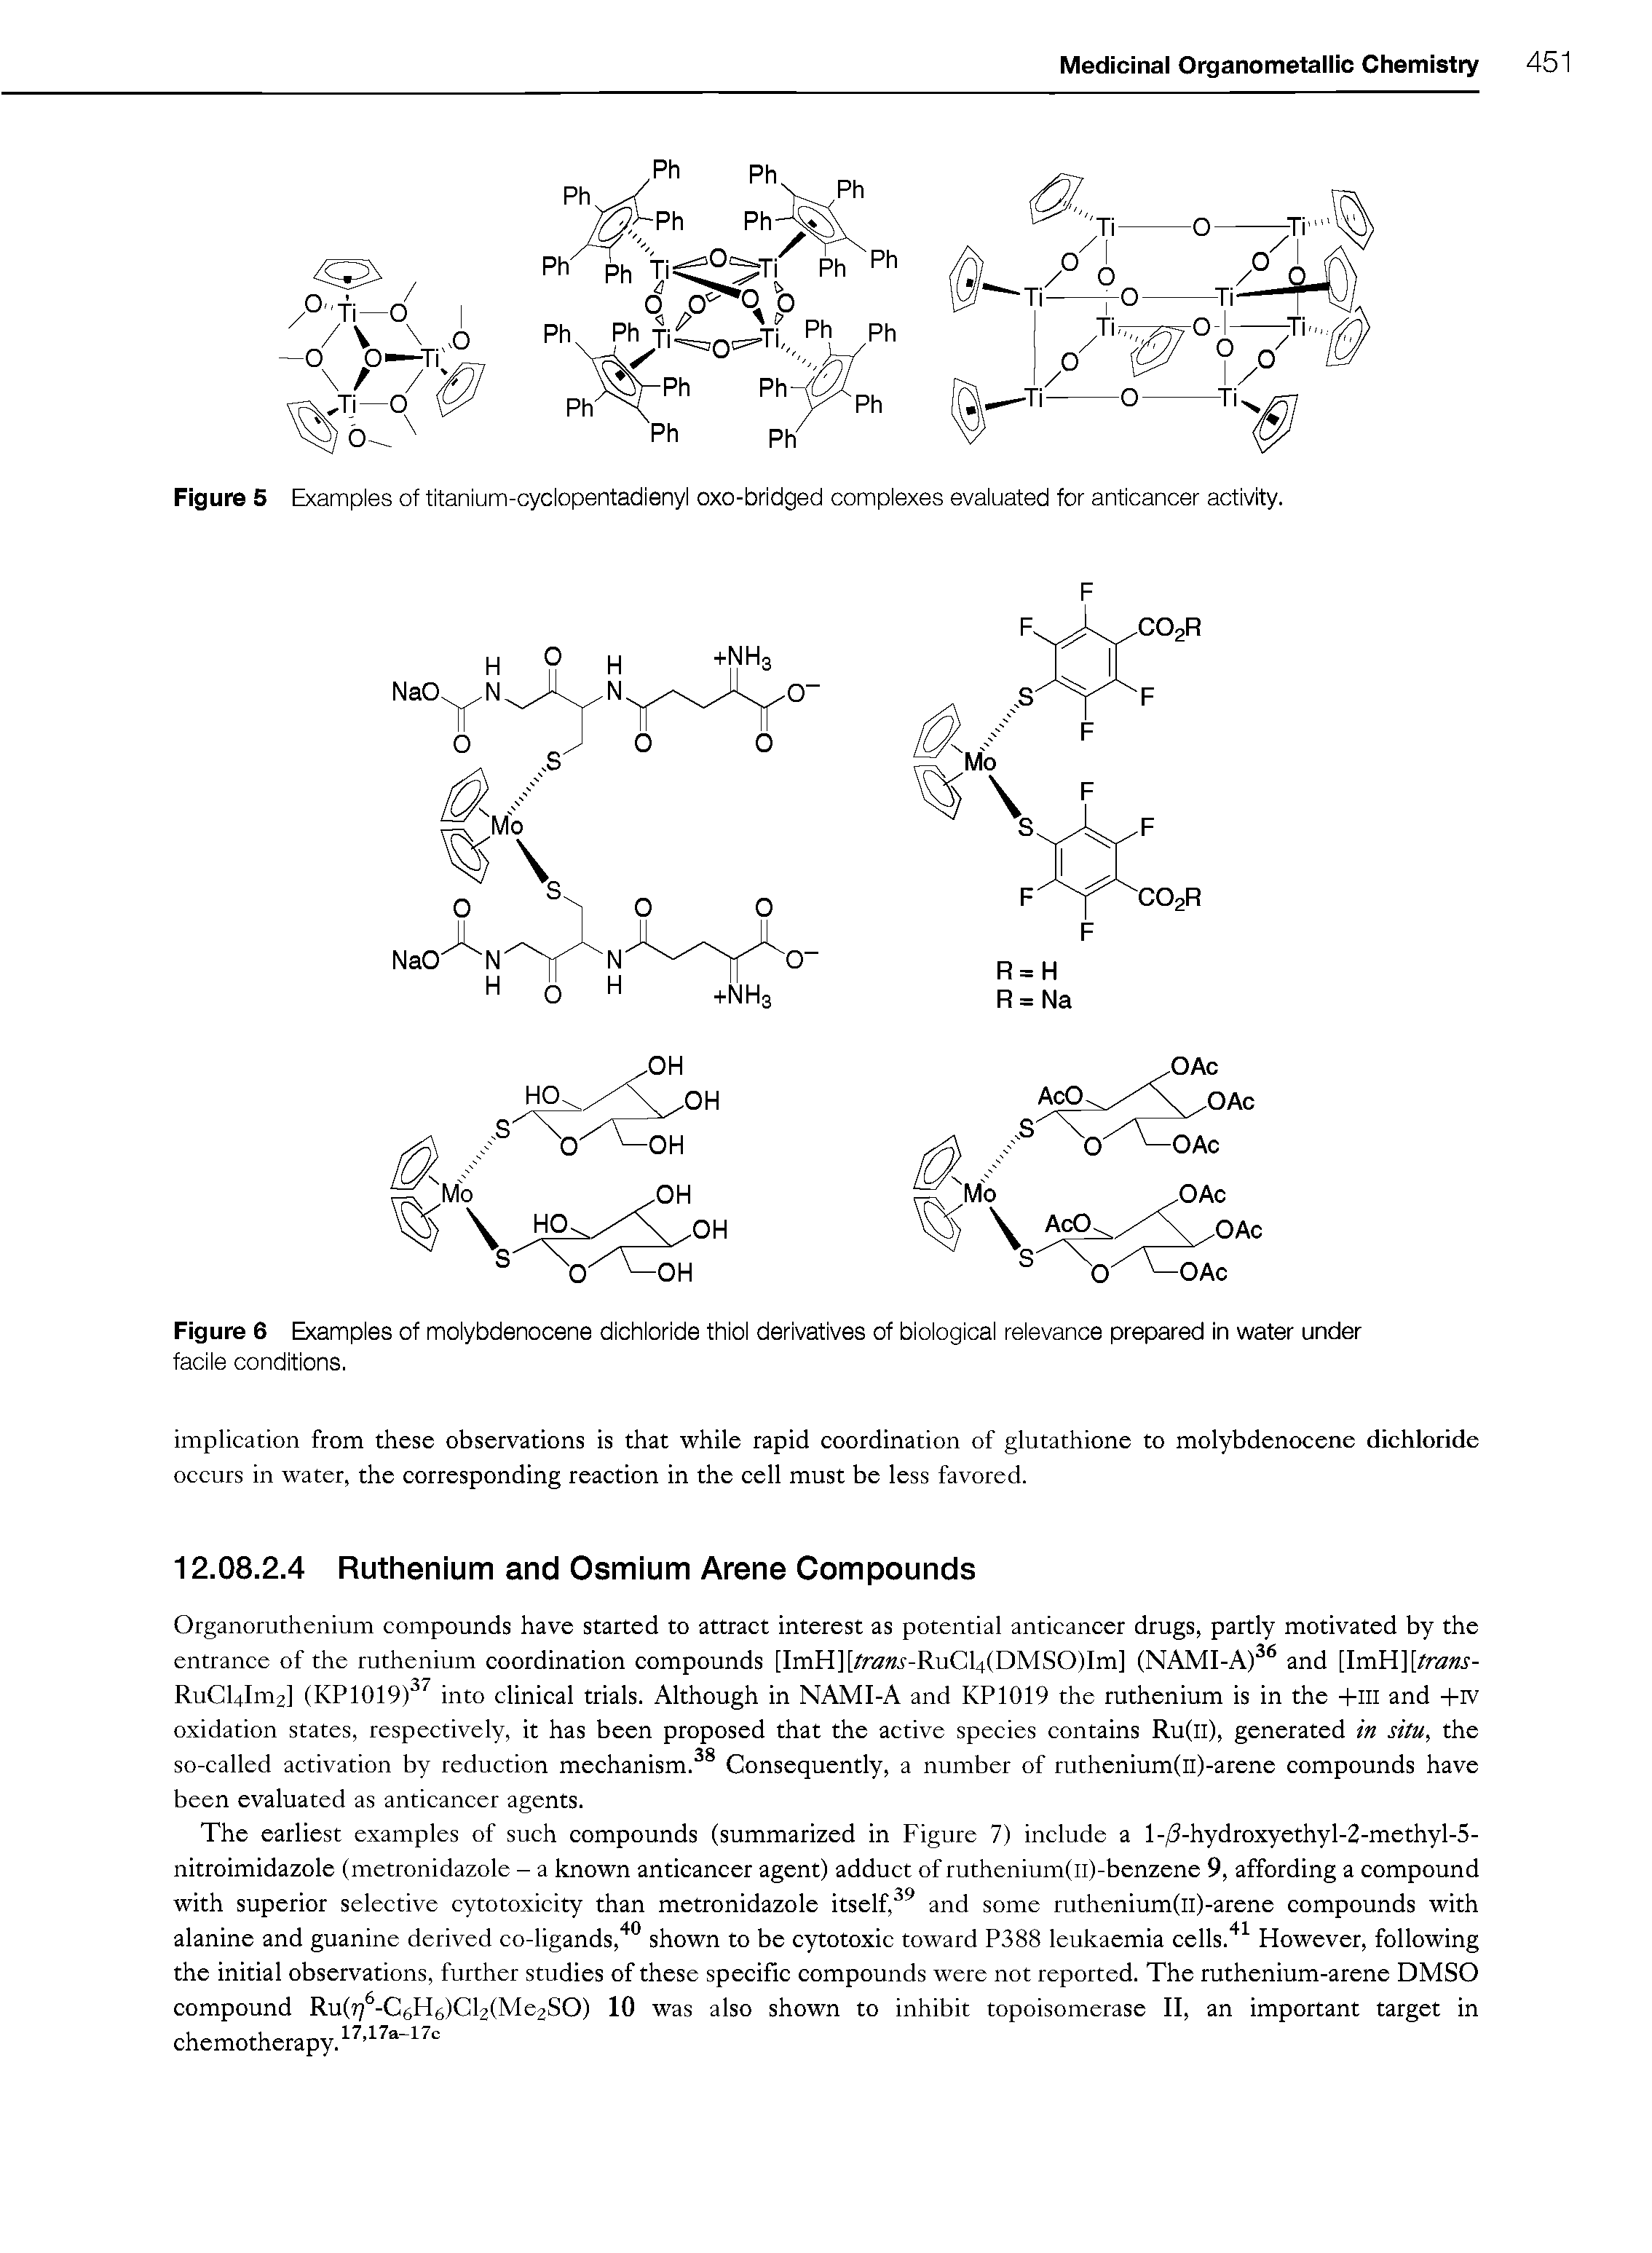 Figure 5 Examples of titanium-cyclopentadienyl oxo-bridged complexes evaluated for anticancer activity.